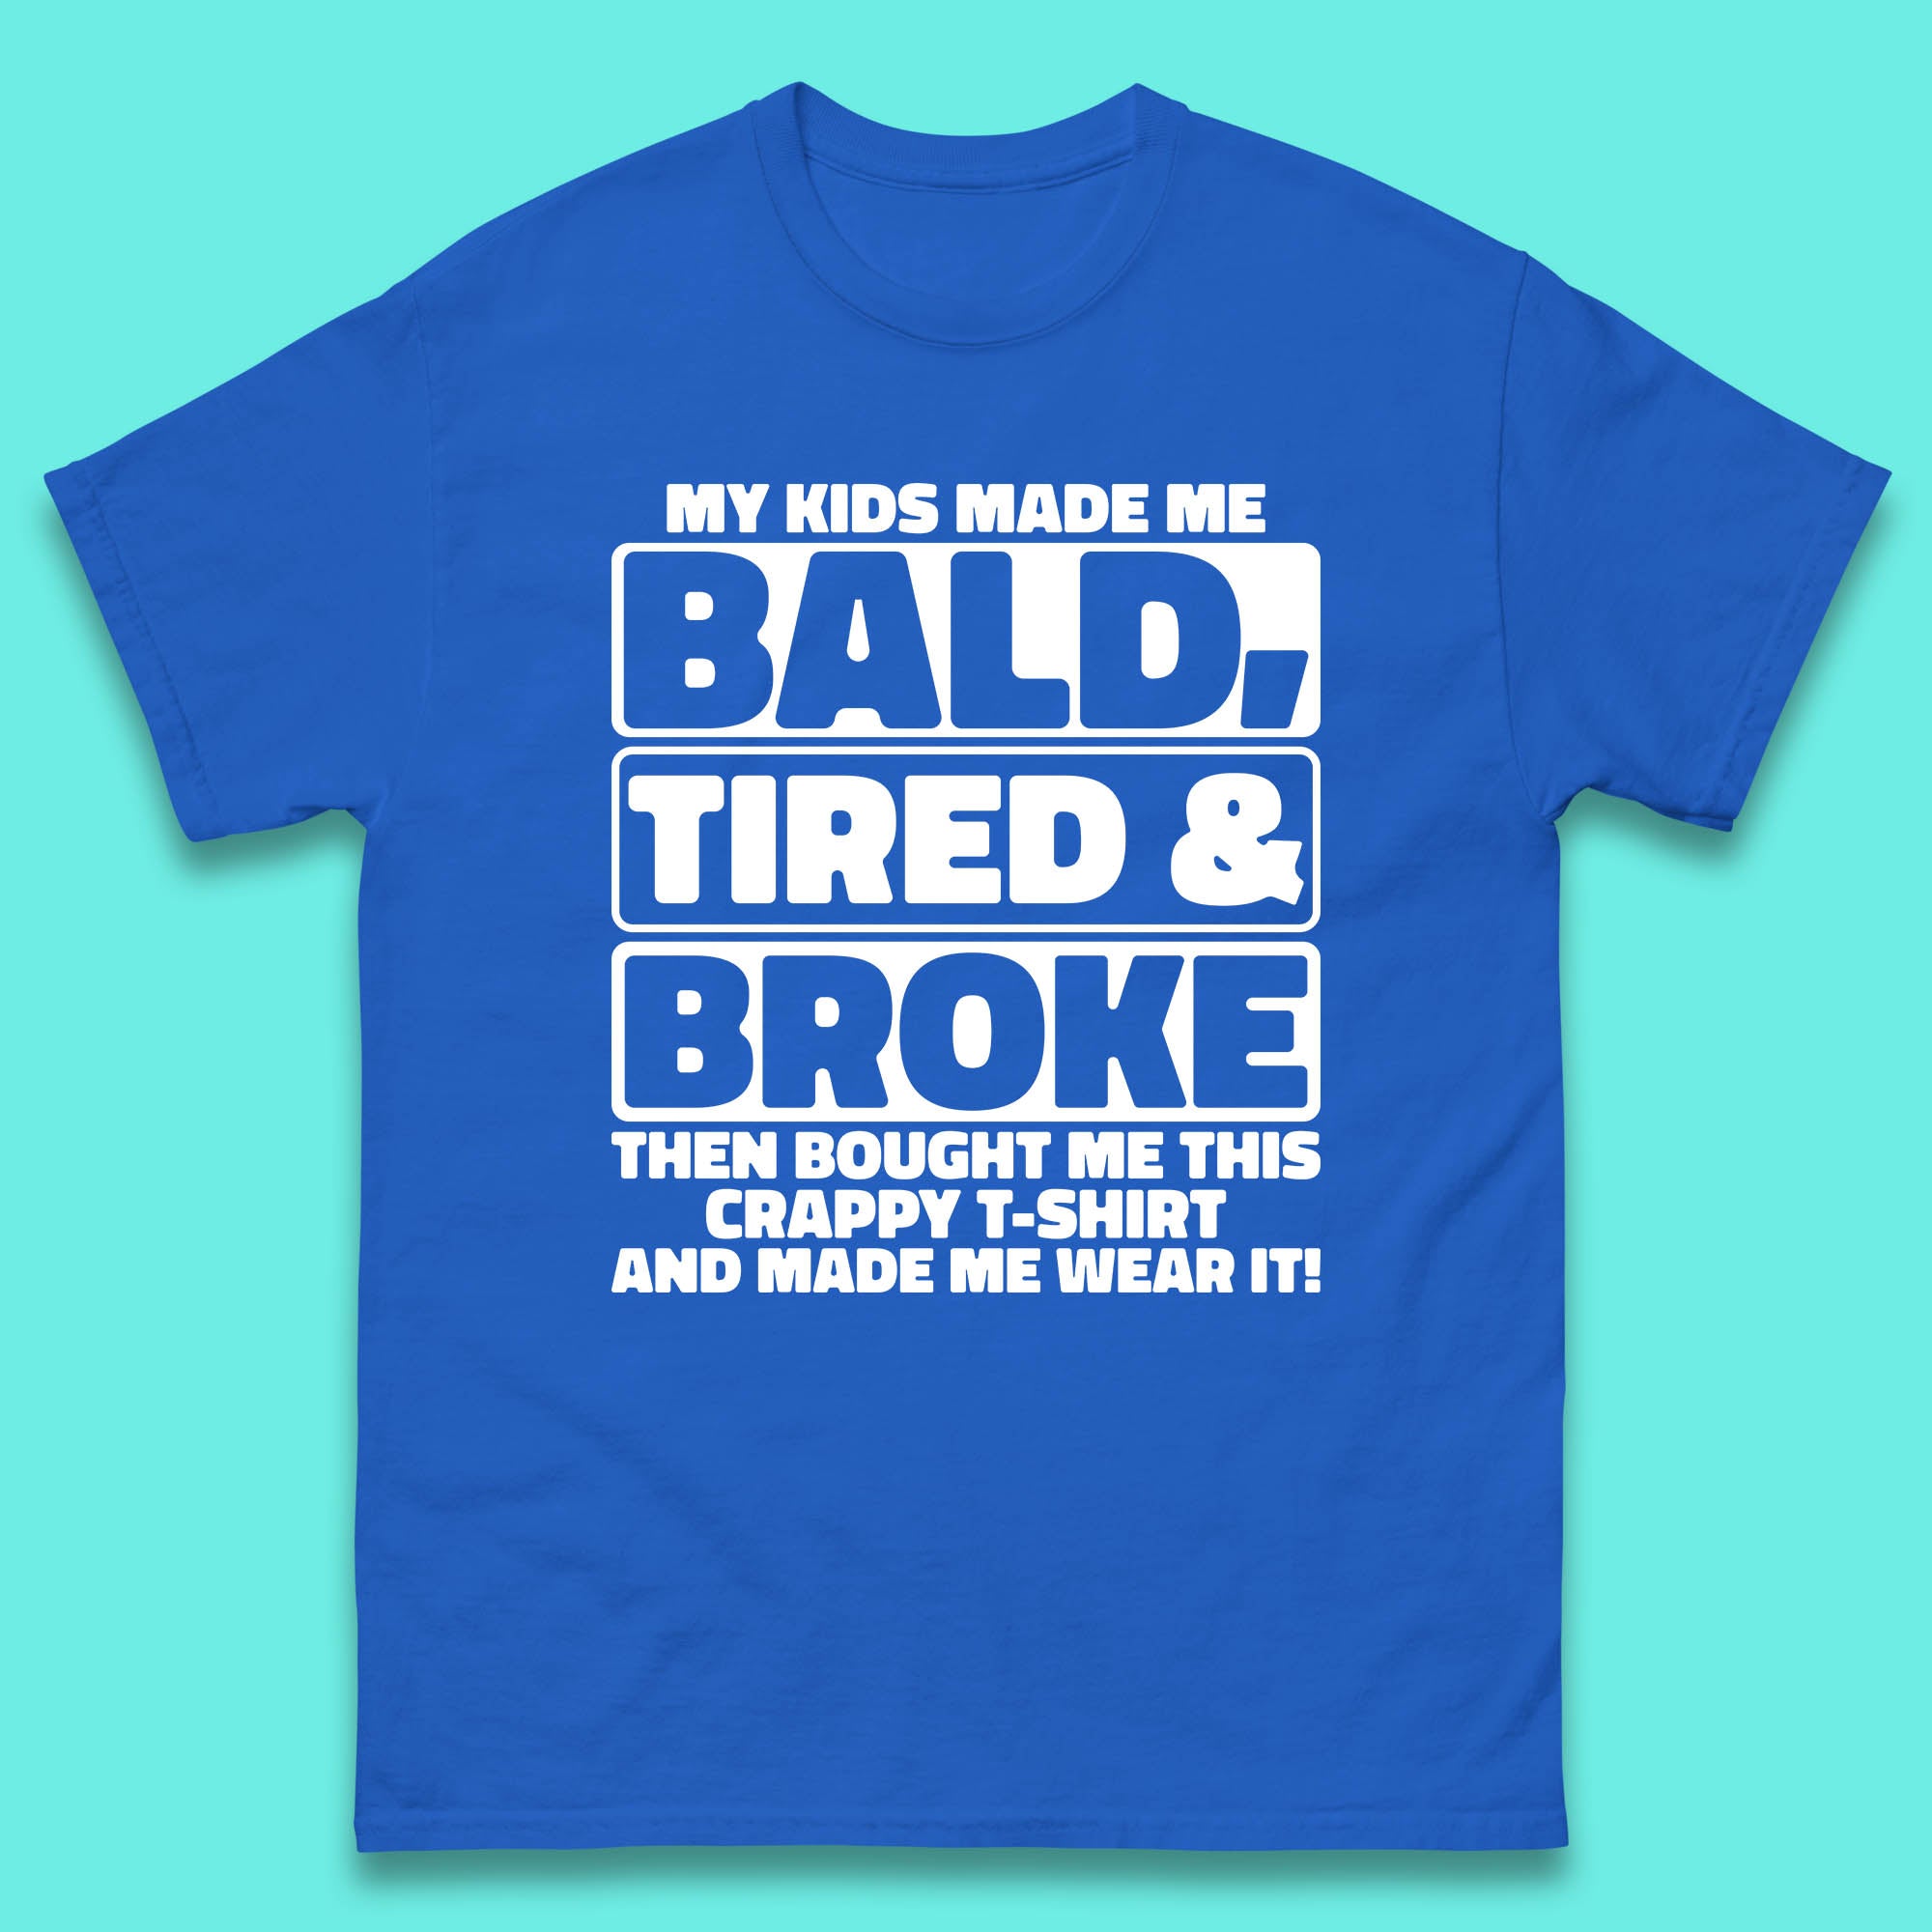 My Kids Made Me Bald Tired & Broke Funny Slogan Funny Dad Joke Spoof Mens Tee Top